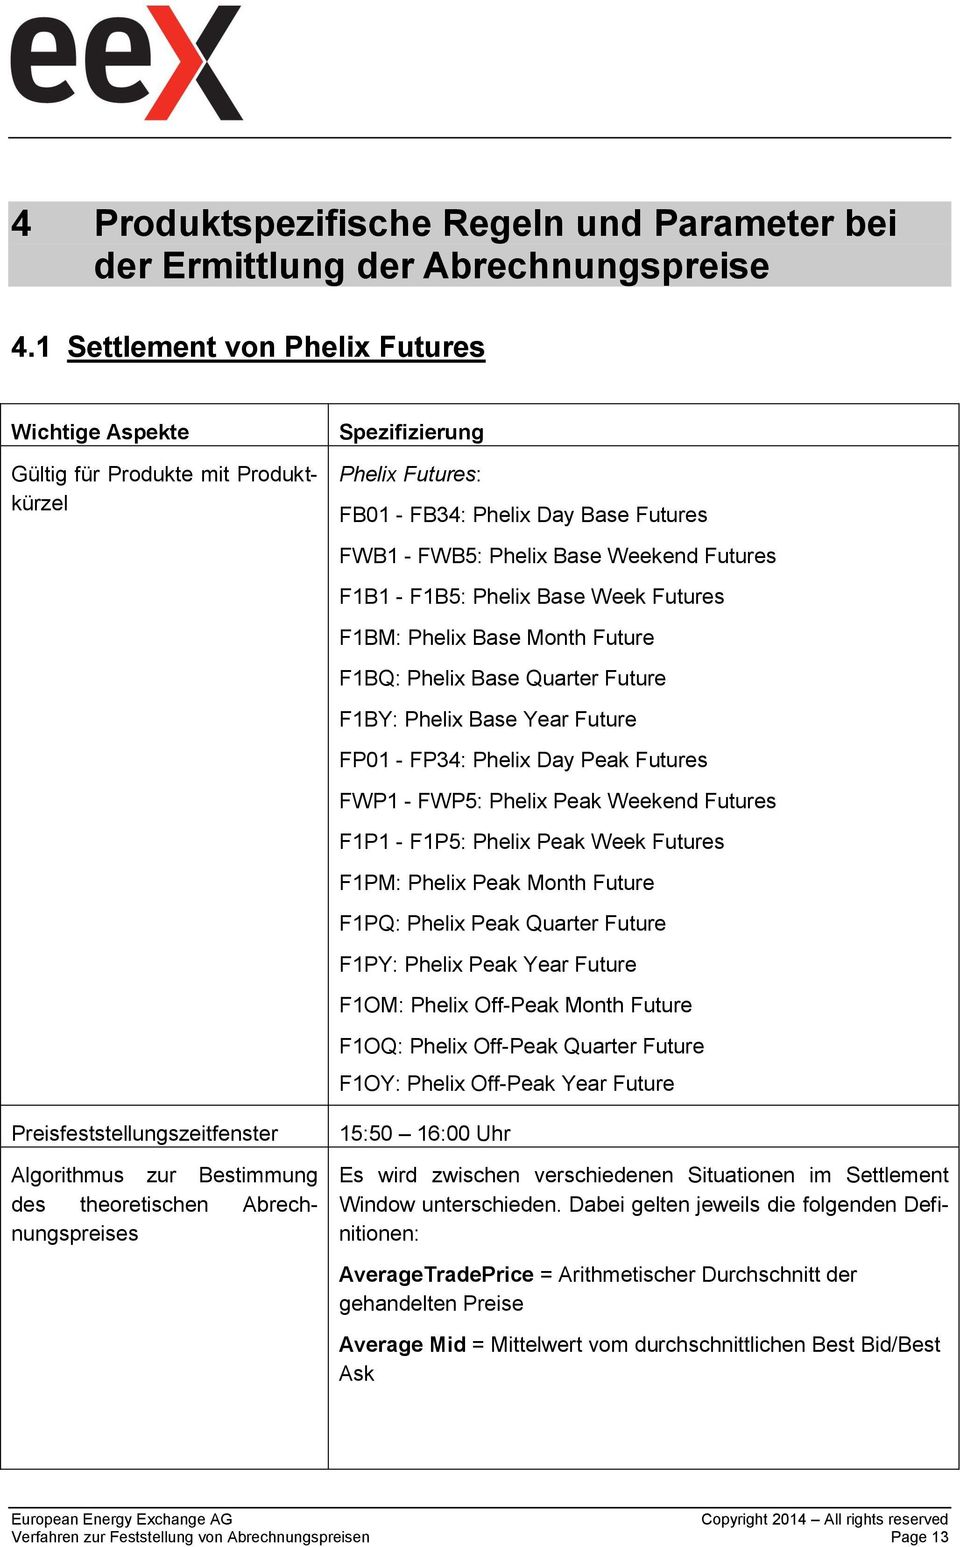 Phelix Futures: FB01 - FB34: Phelix Day Base Futures FWB1 - FWB5: Phelix Base Weekend Futures F1B1 - F1B5: Phelix Base Week Futures F1BM: Phelix Base Month Future F1BQ: Phelix Base Quarter Future